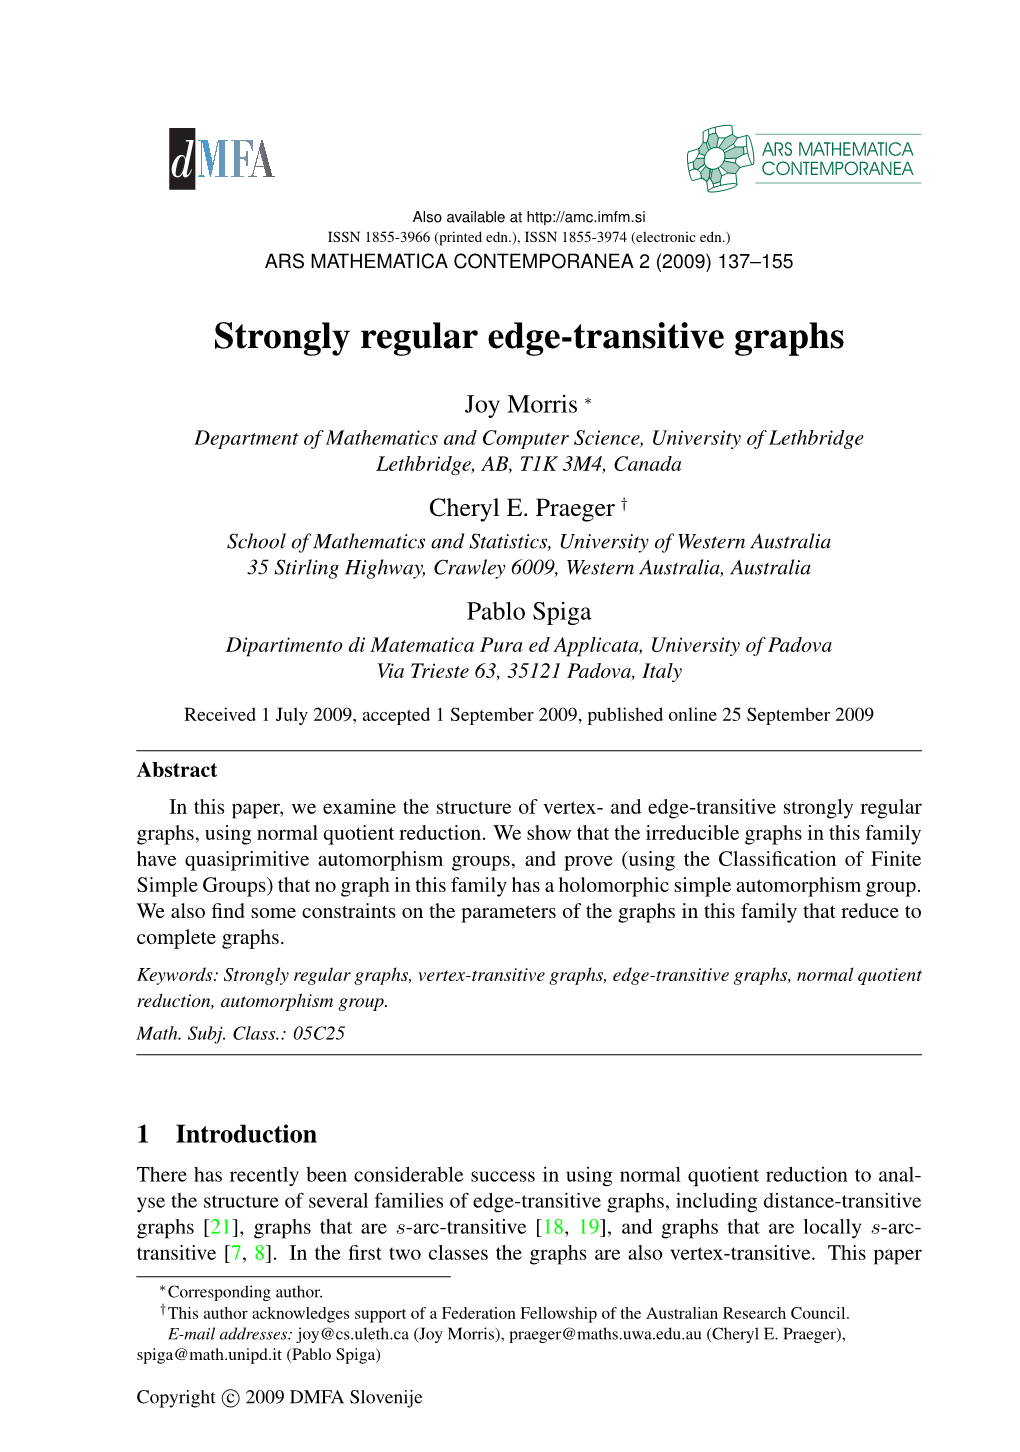 Strongly Regular Edge-Transitive Graphs